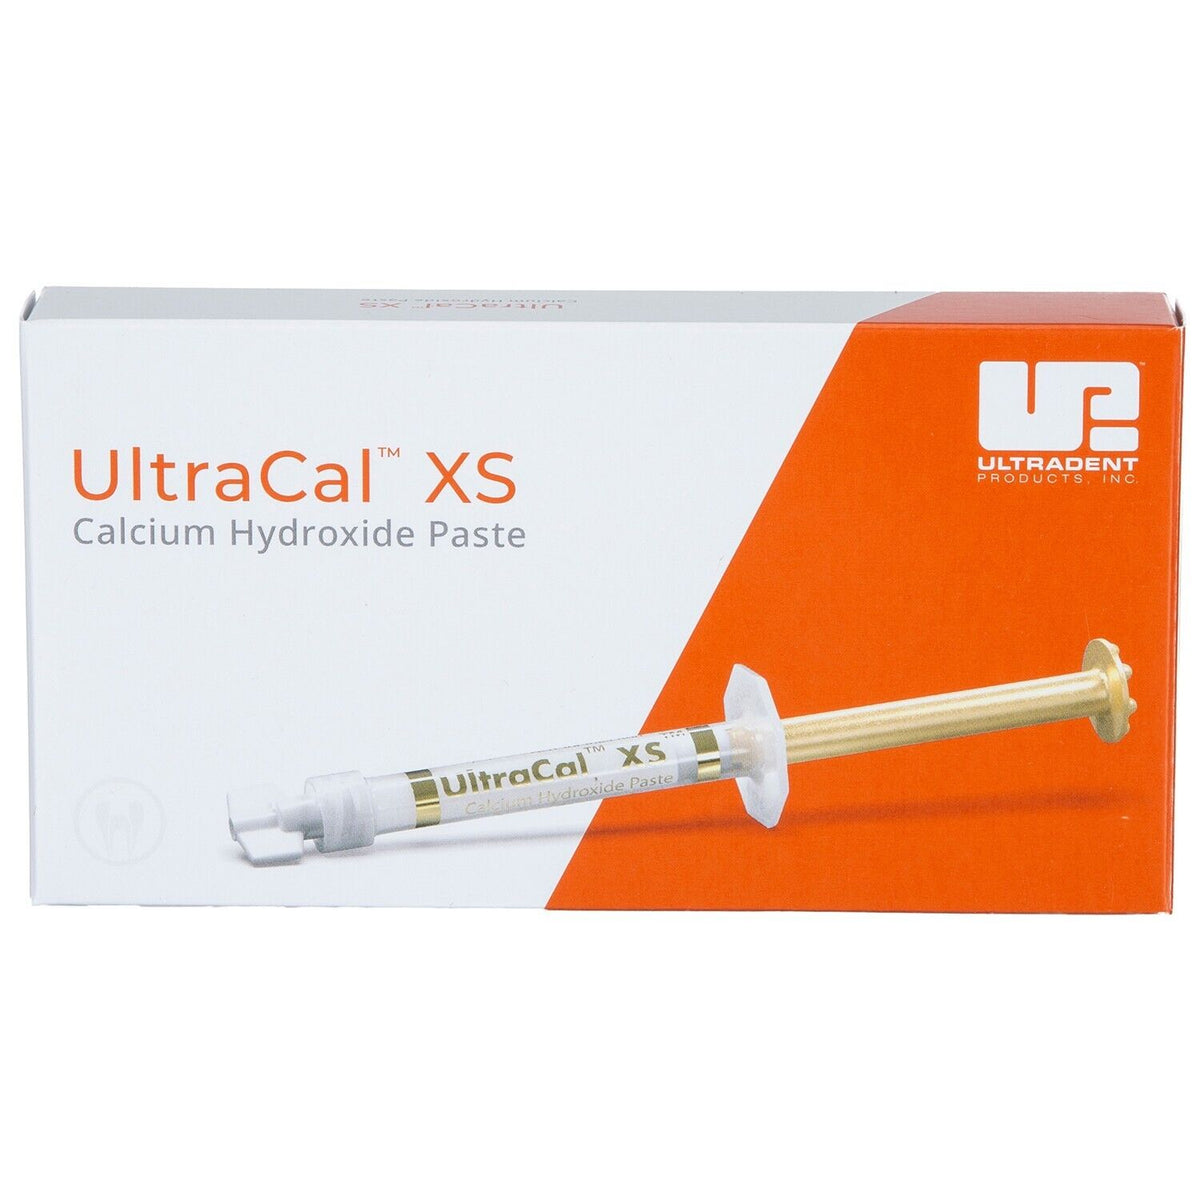 DentrealStore - Ultradent UltraCal XS Calcium Hydroxide Paste Refil